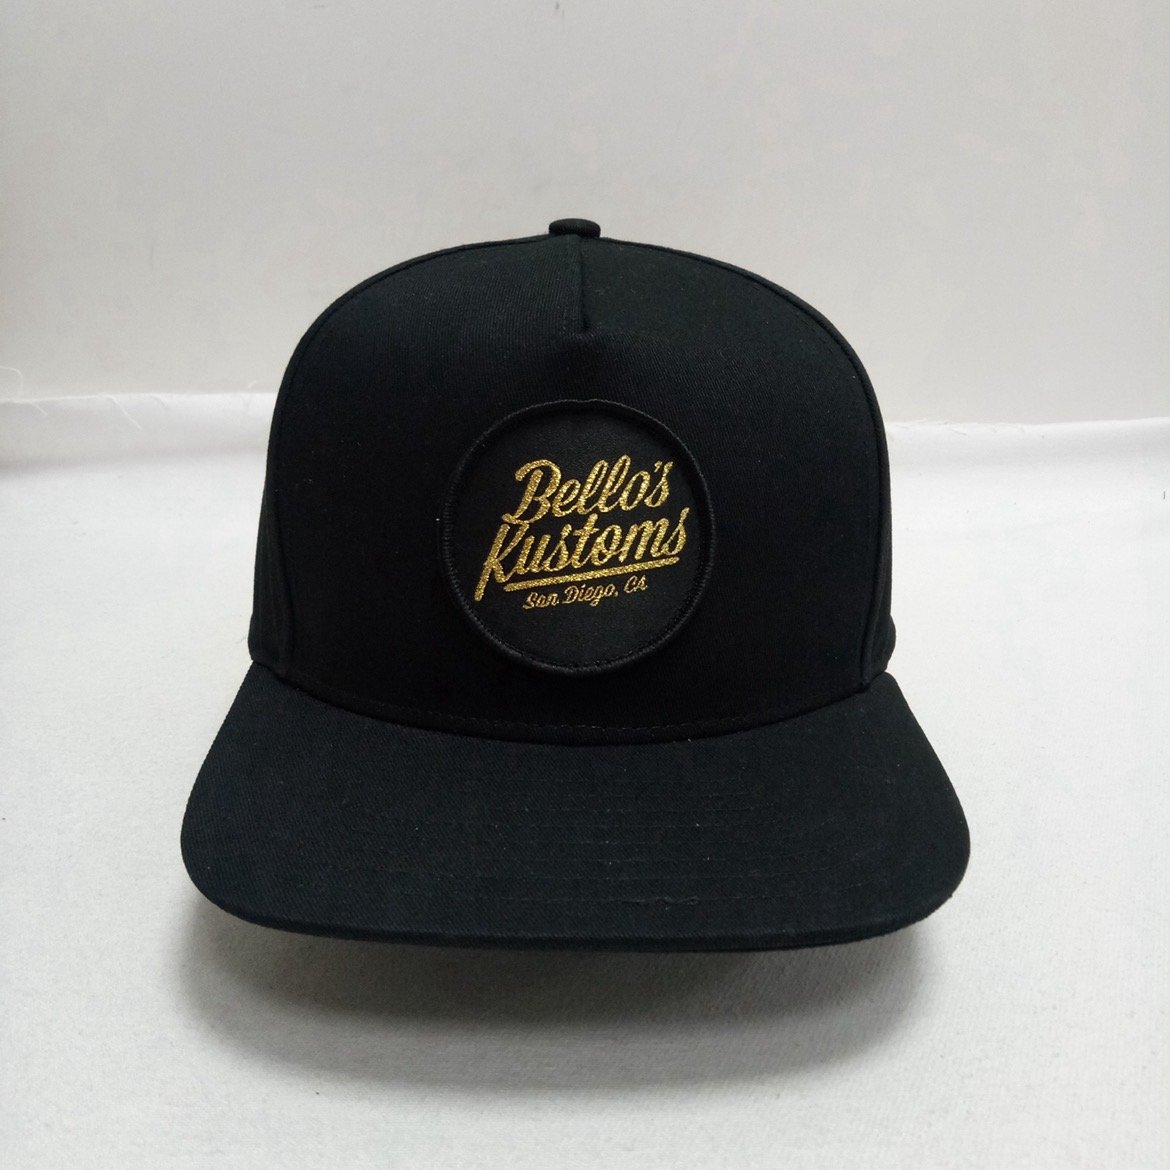 BELLOS KUSTOMS BLACK FITTED CAP | BELLO’S KUSTOMS